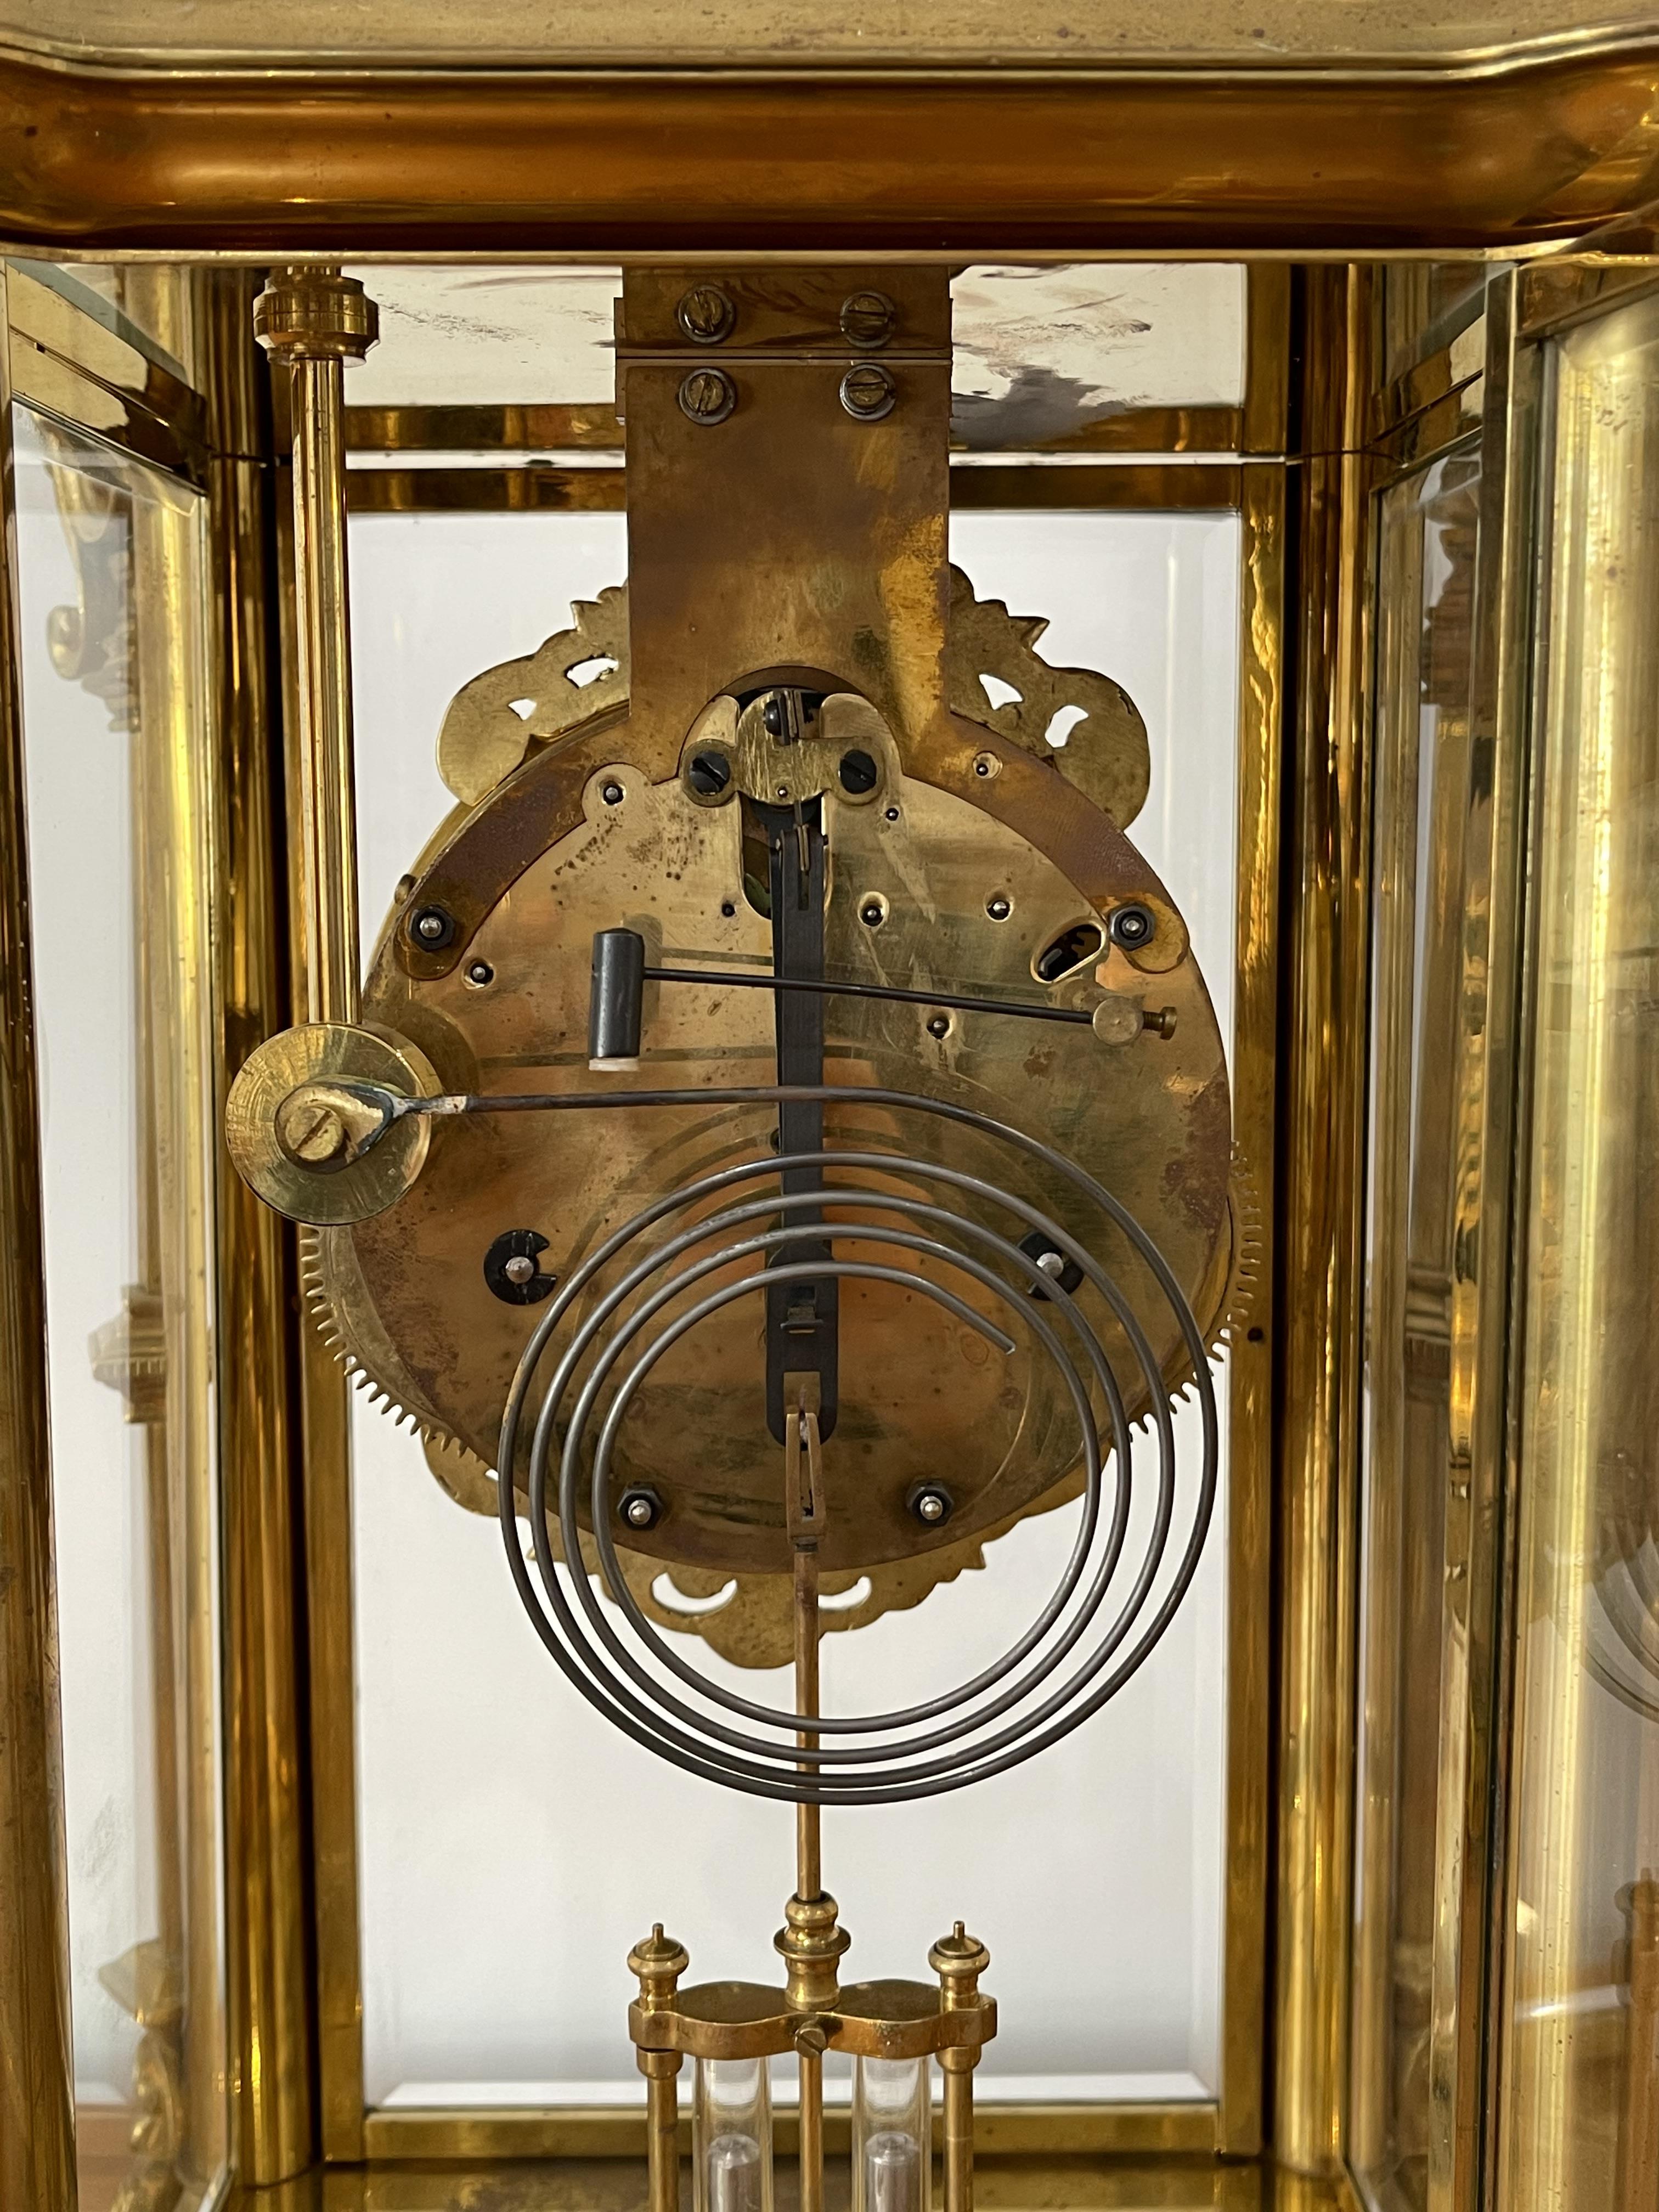 Stunning 8 Day Striking Brass Four Glass Ansonia Mantel Clock - Image 10 of 21